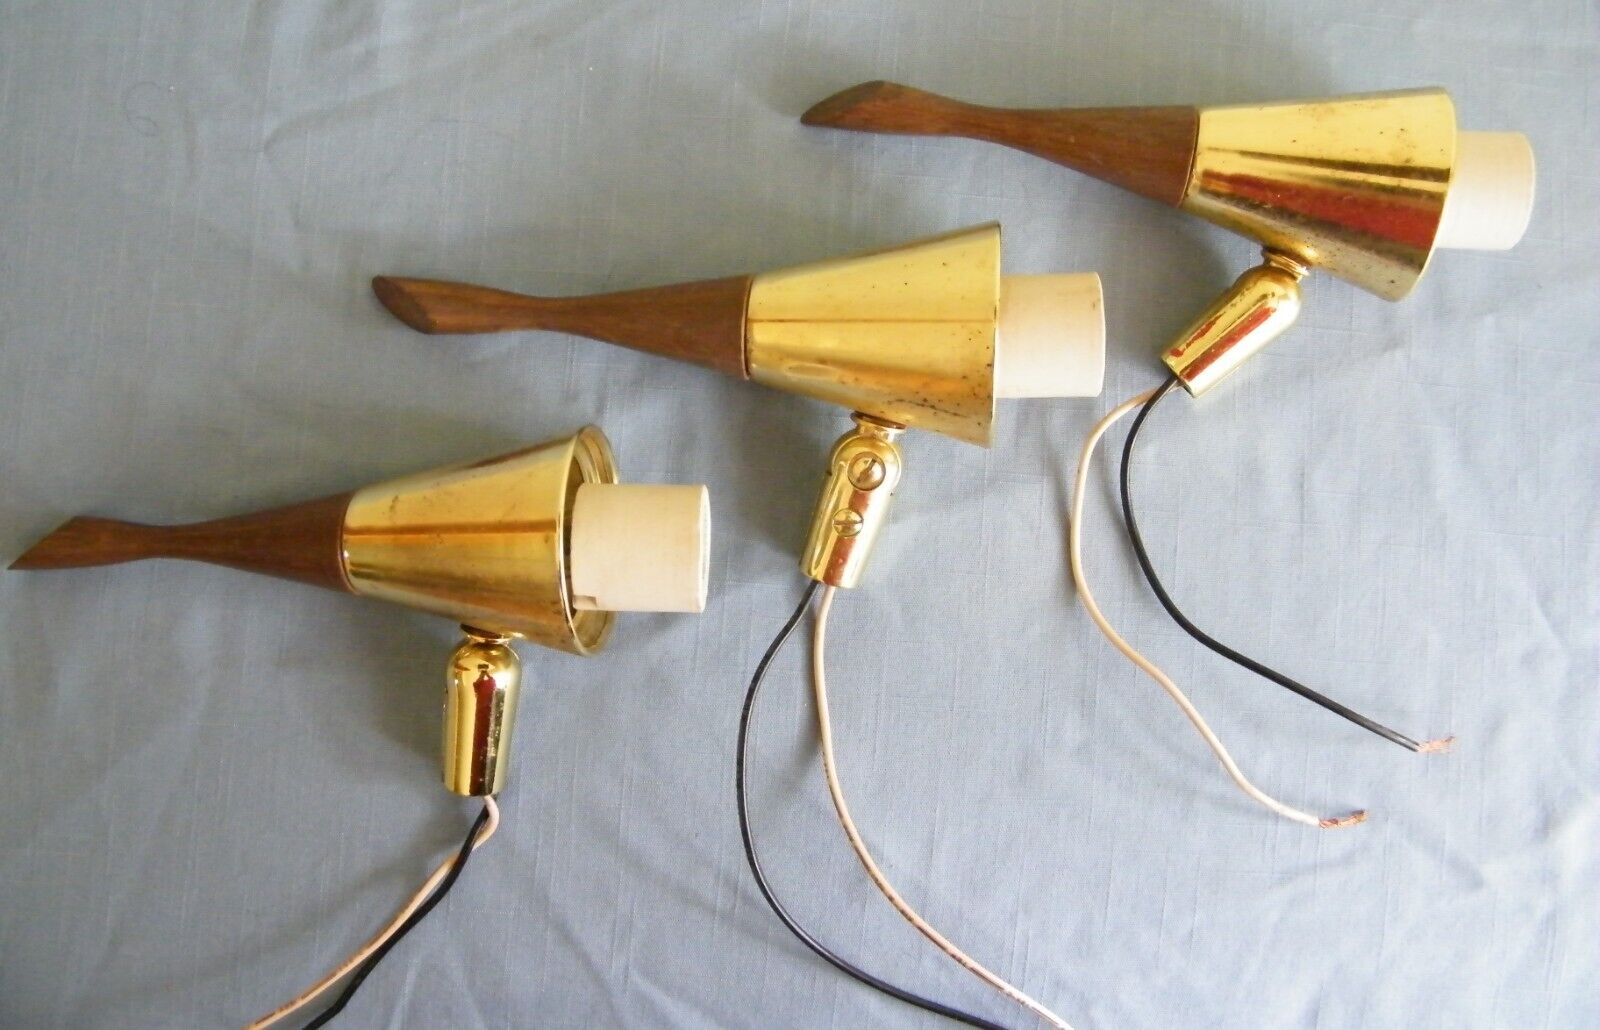 3 Vintage Tension Pole Floor Lamp Parts Gold Tone & Wood ~ Shade Holder Sockets